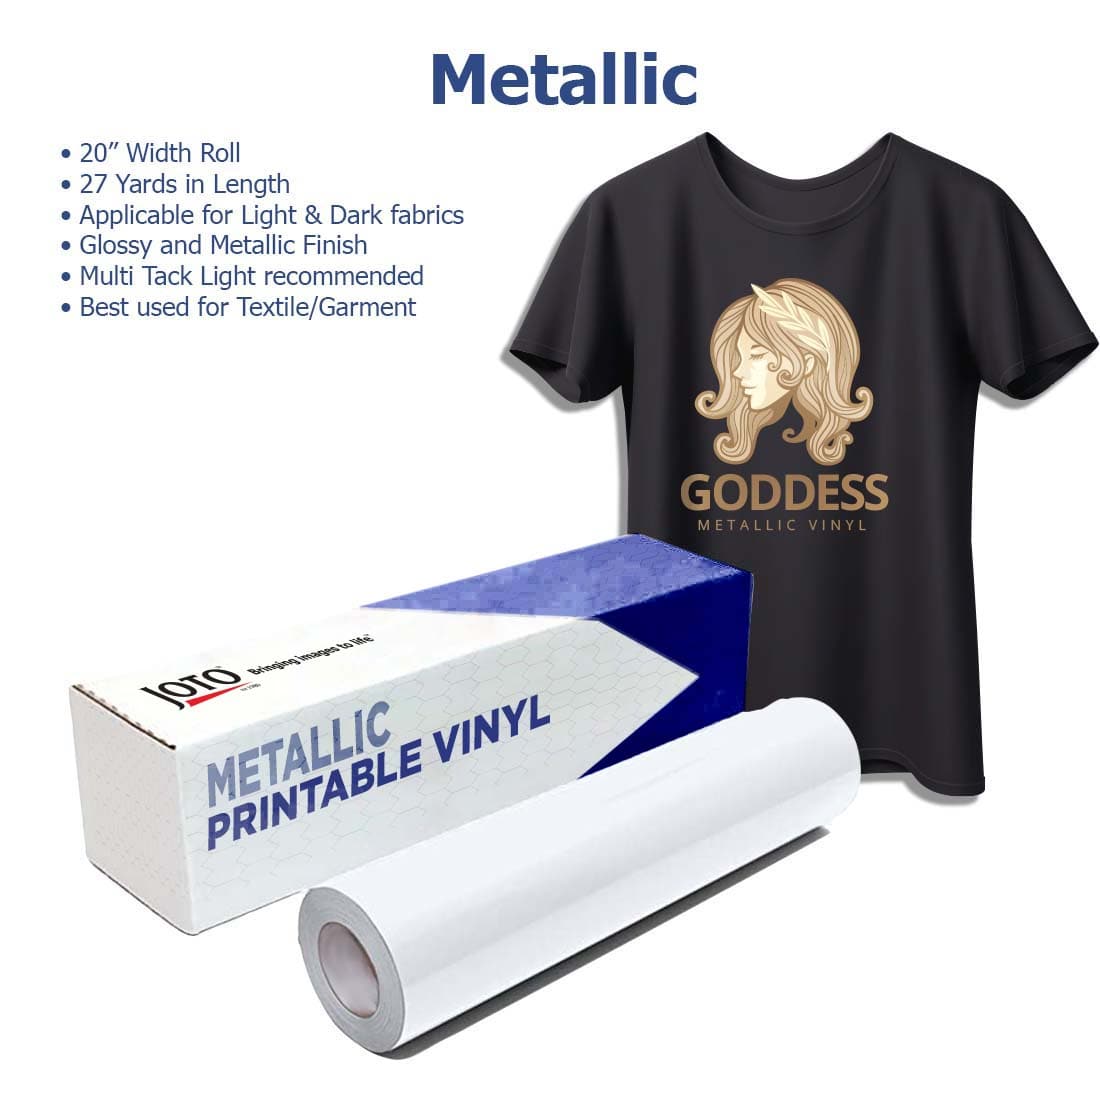 MultiPrint™ Metallic Printable Heat Transfer Vinyl - Joto Imaging Supplies US